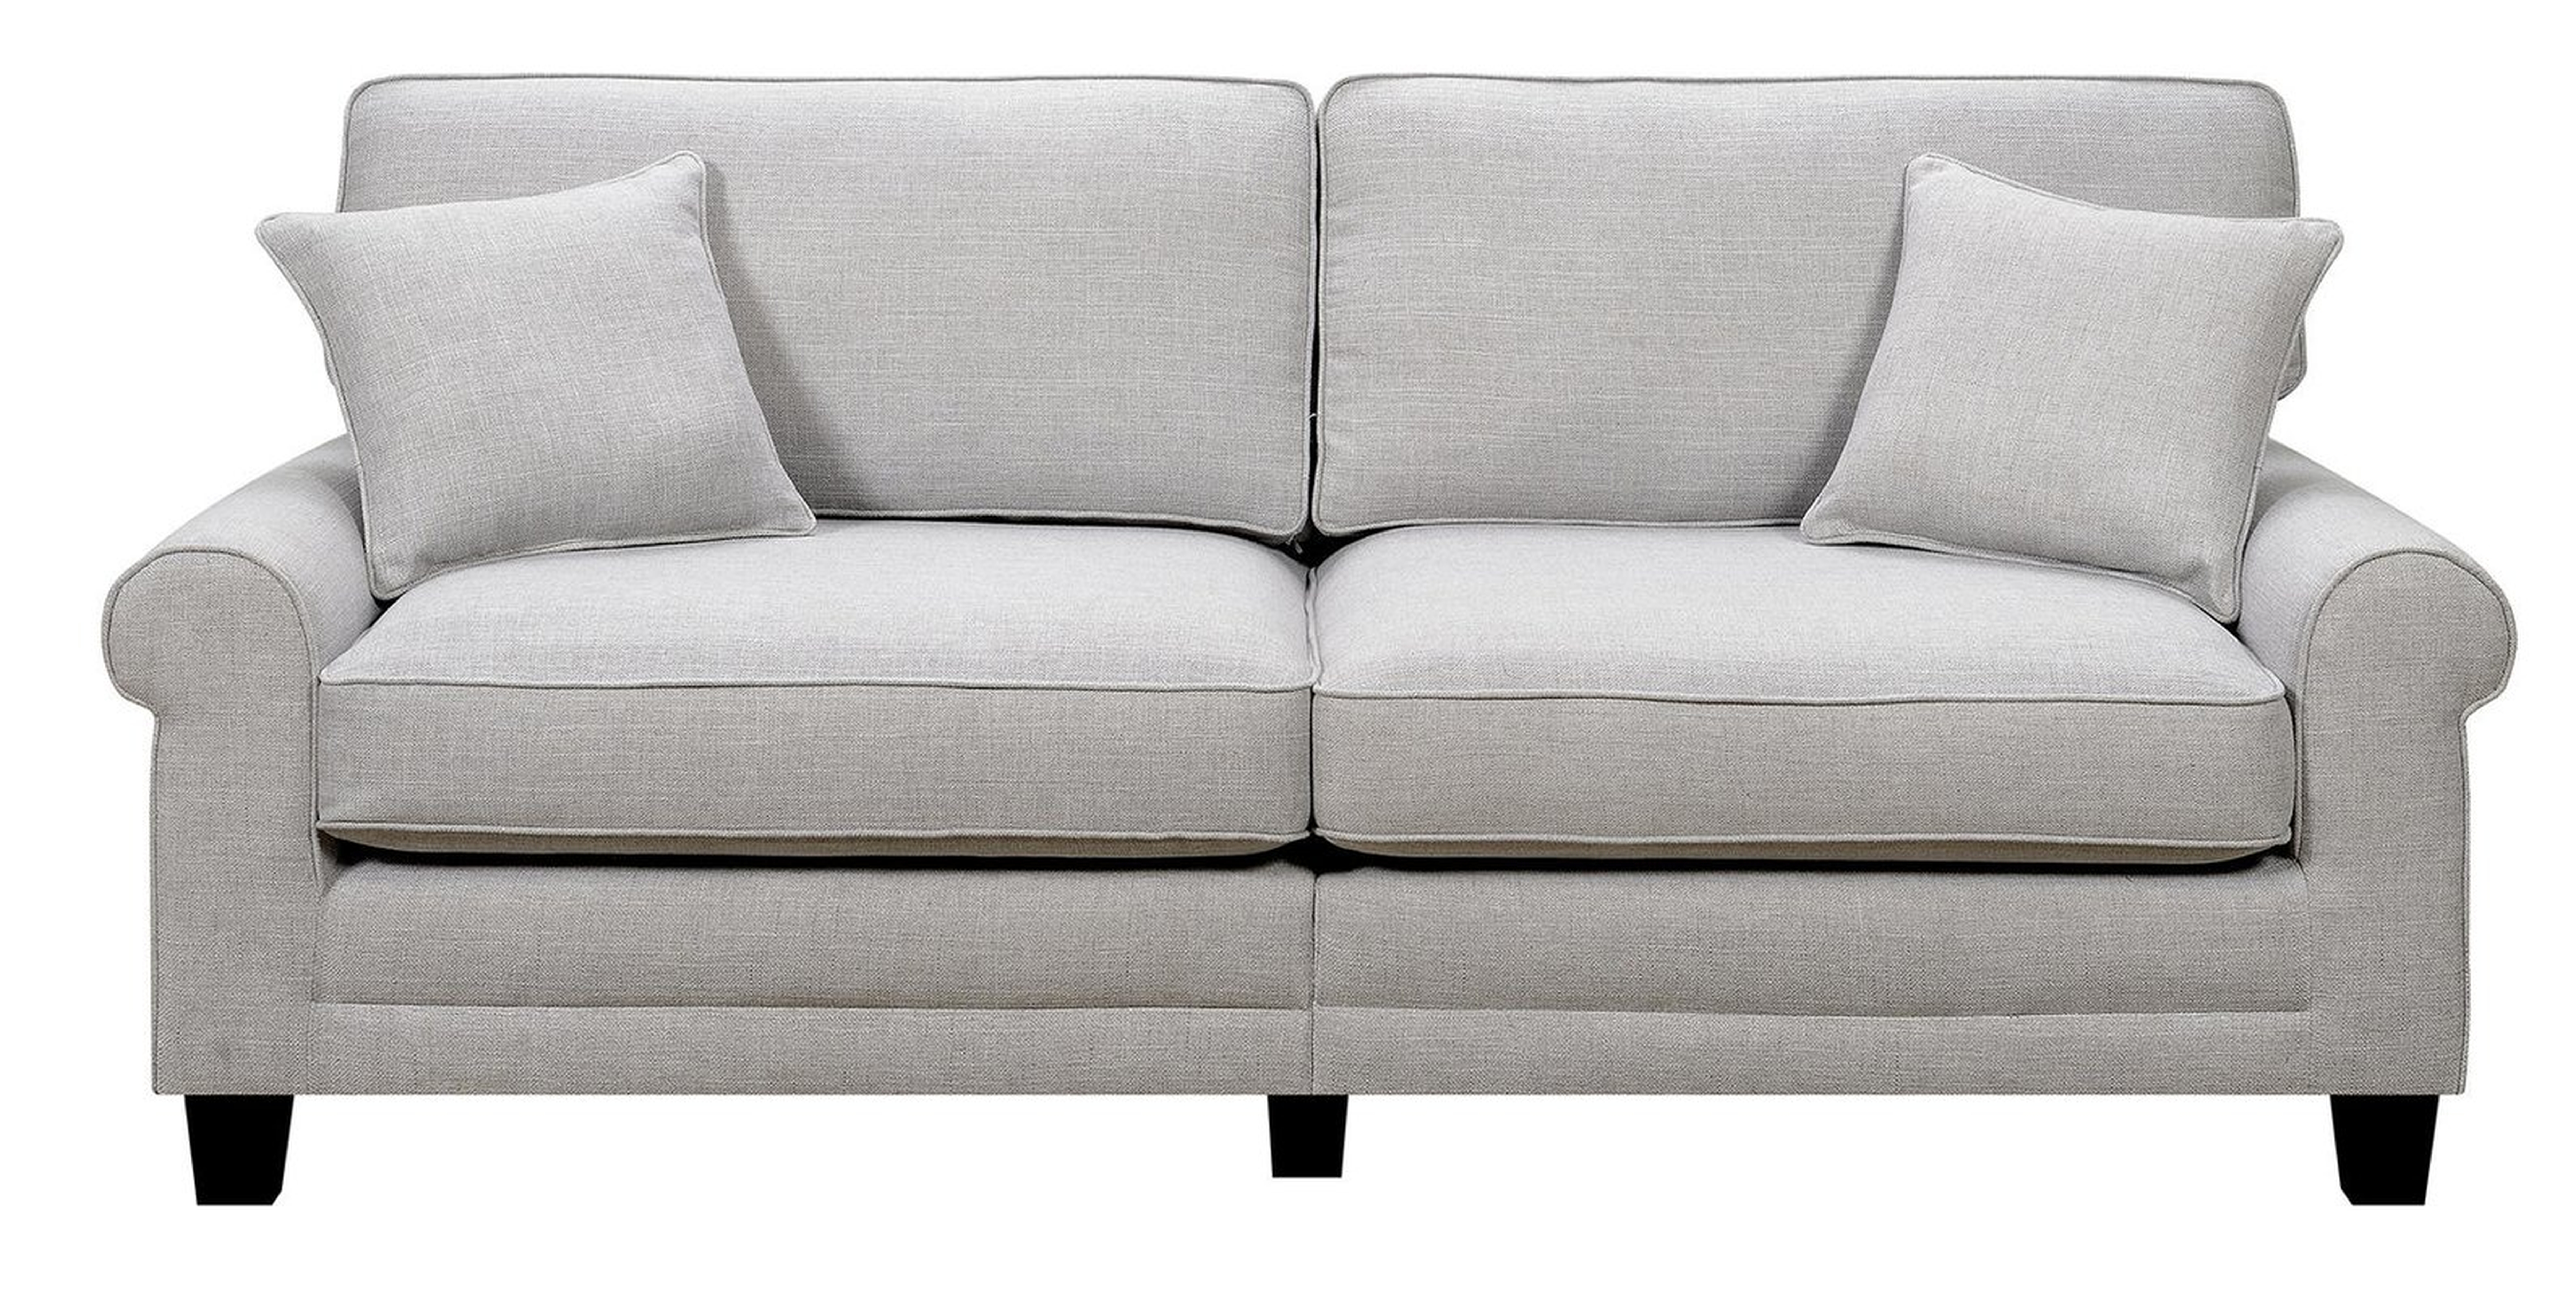 Beachcrest Home Buxton 73" Rolled Arm Sofa in Light Gray - Wayfair